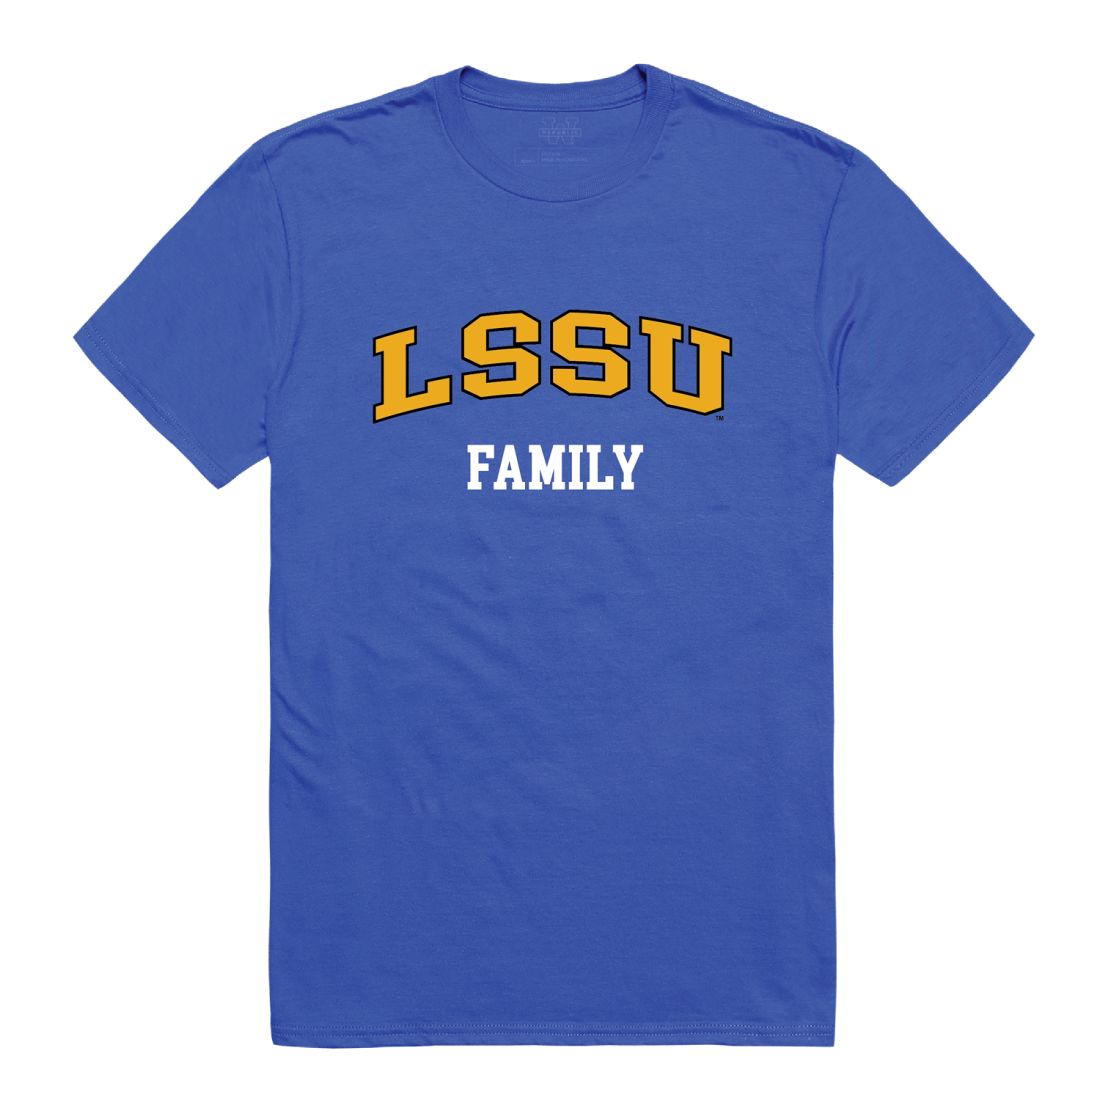 LSSU Lake Superior State University Lakers Family T-Shirt